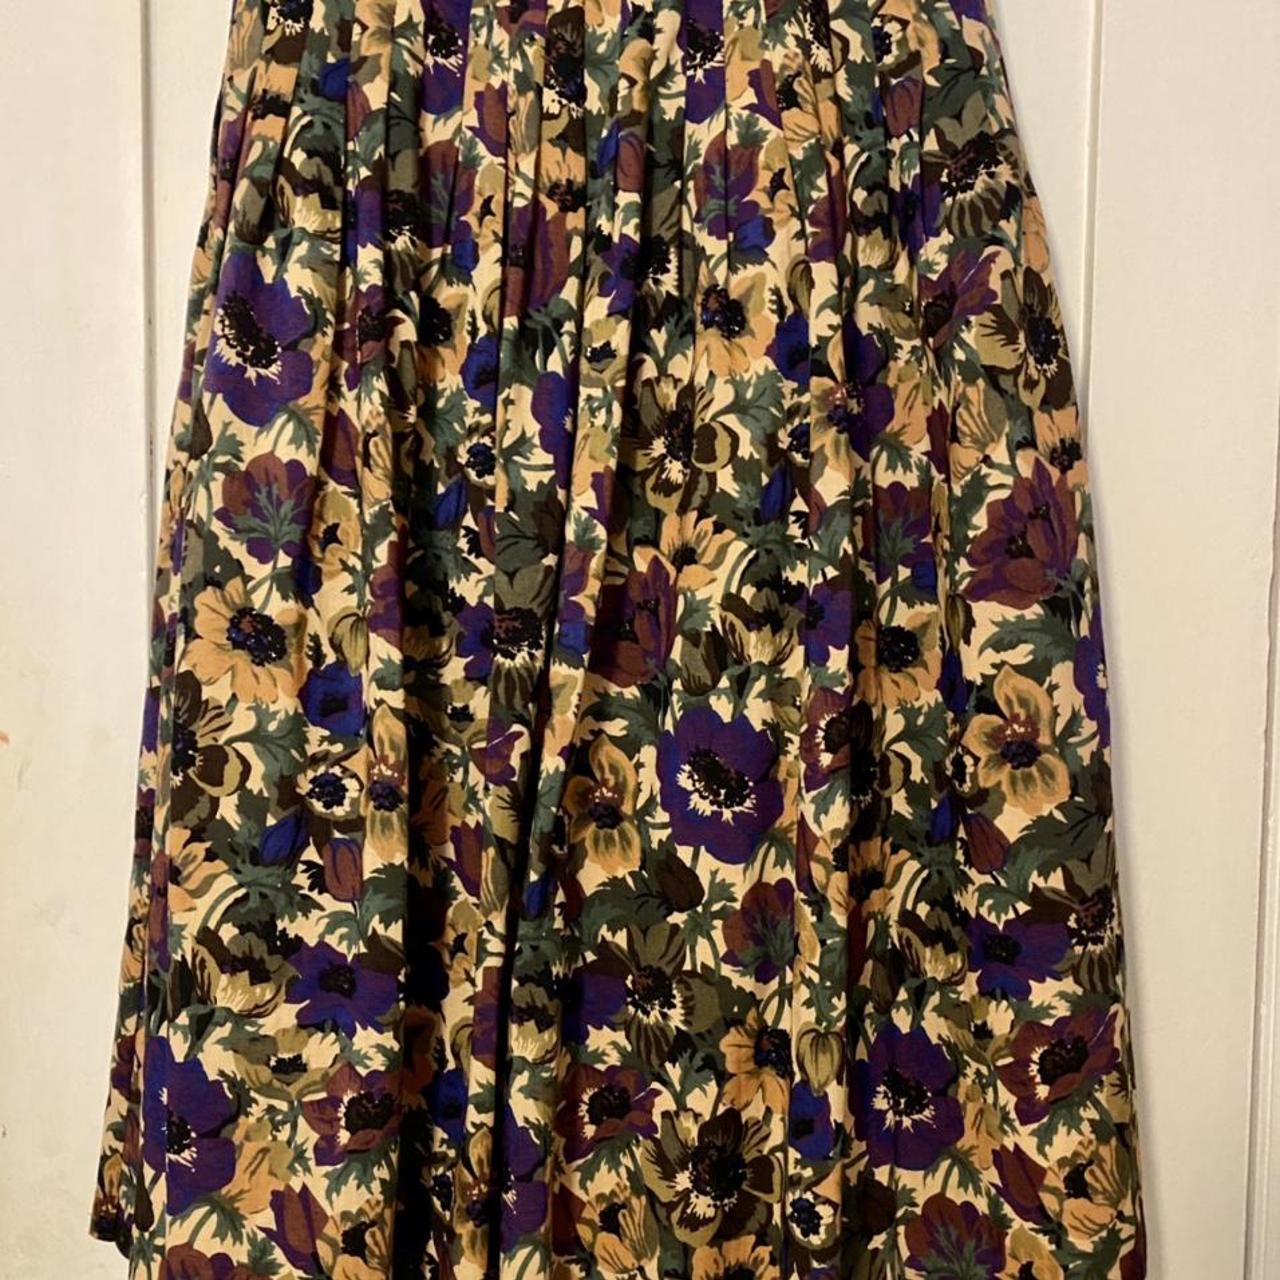 Vintage Penny Plain floral skirt. Beautiful, but too... - Depop